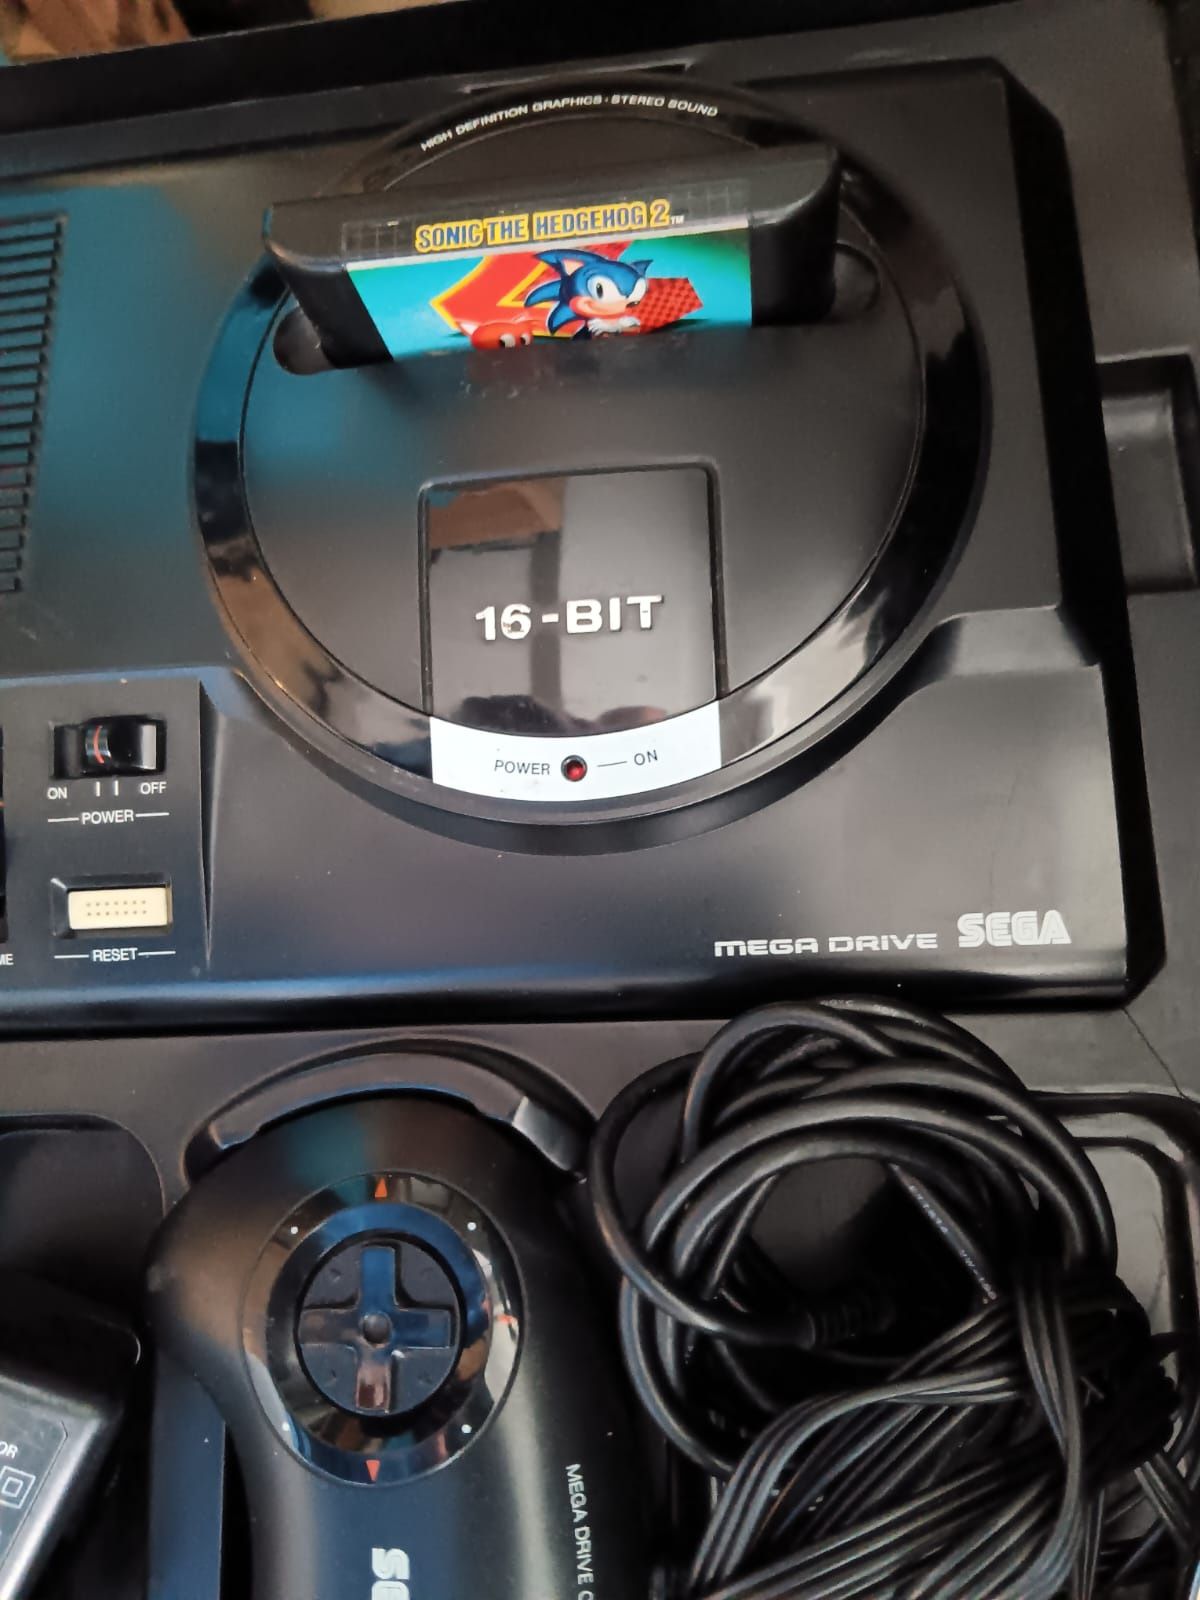 Consola Sega mega drive 1, 16-Bit , joc Sonic 2 inclus ( Functional )